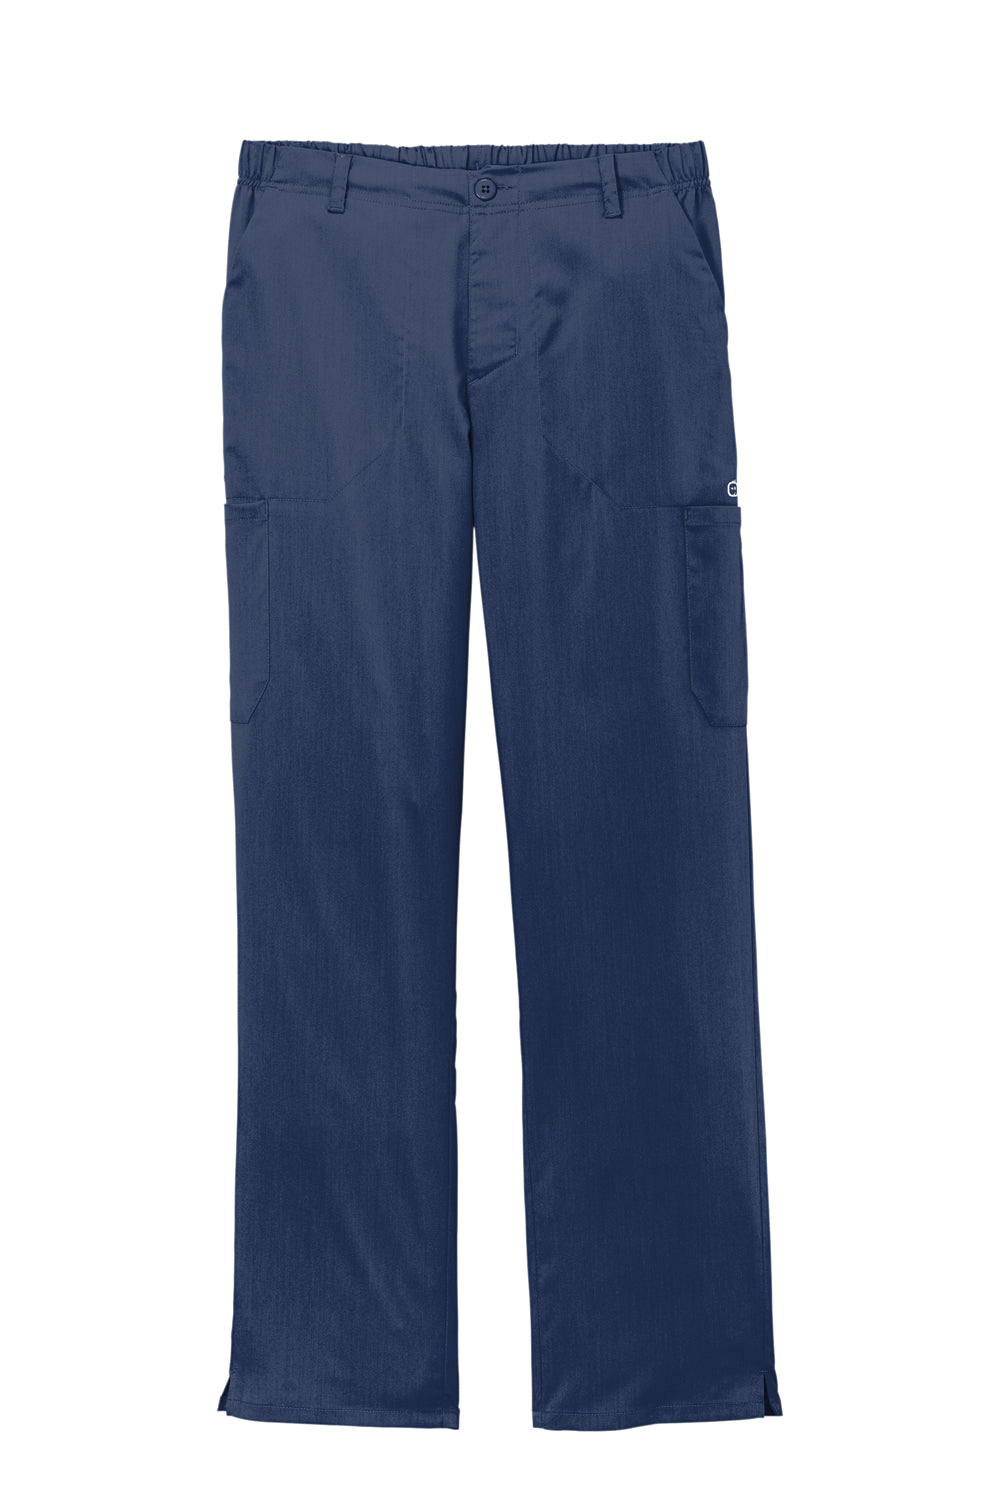 Wonderwink WW5058 Premiere Flex Cargo Pants Navy Blue Flat Front